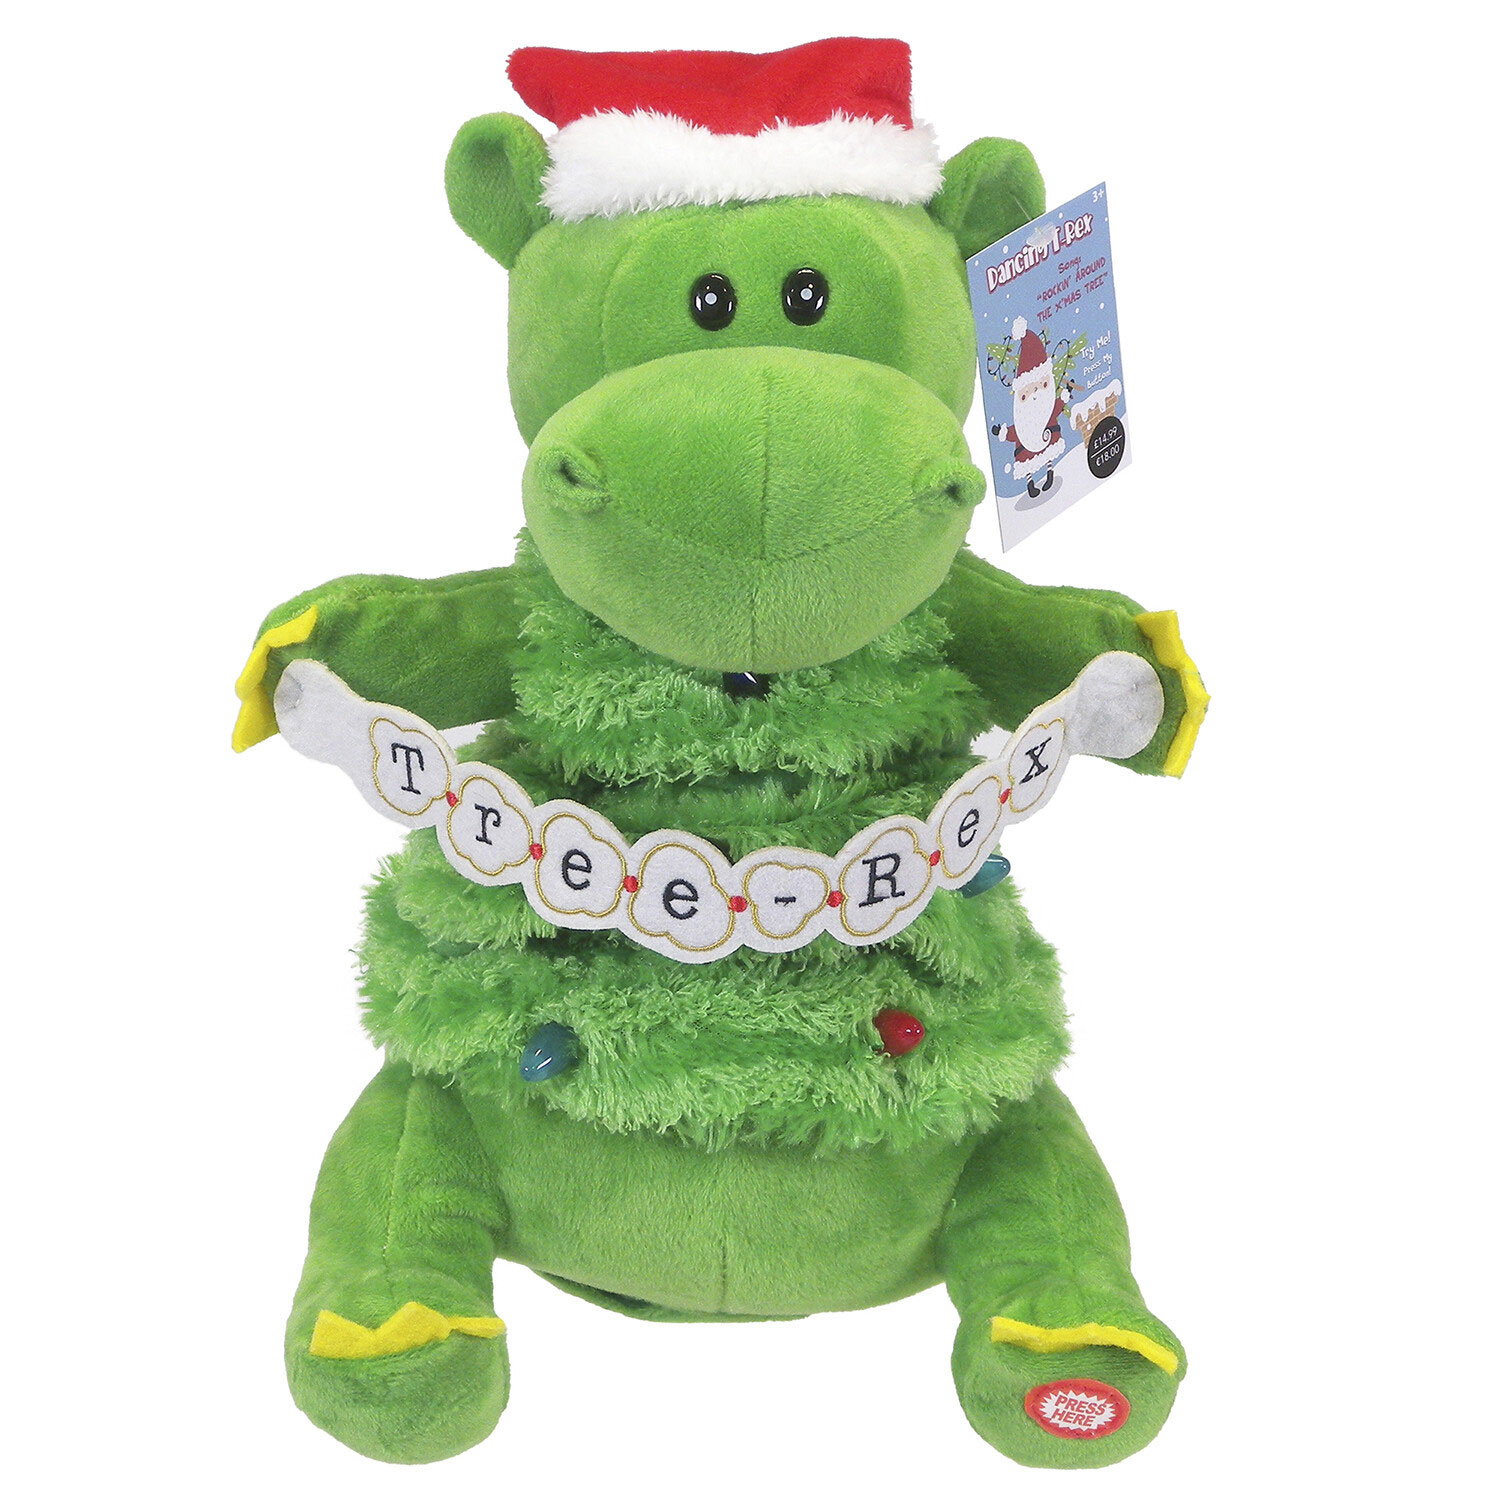  Dancing Tree-Rex - Musical Christmas Dinosaur Plush